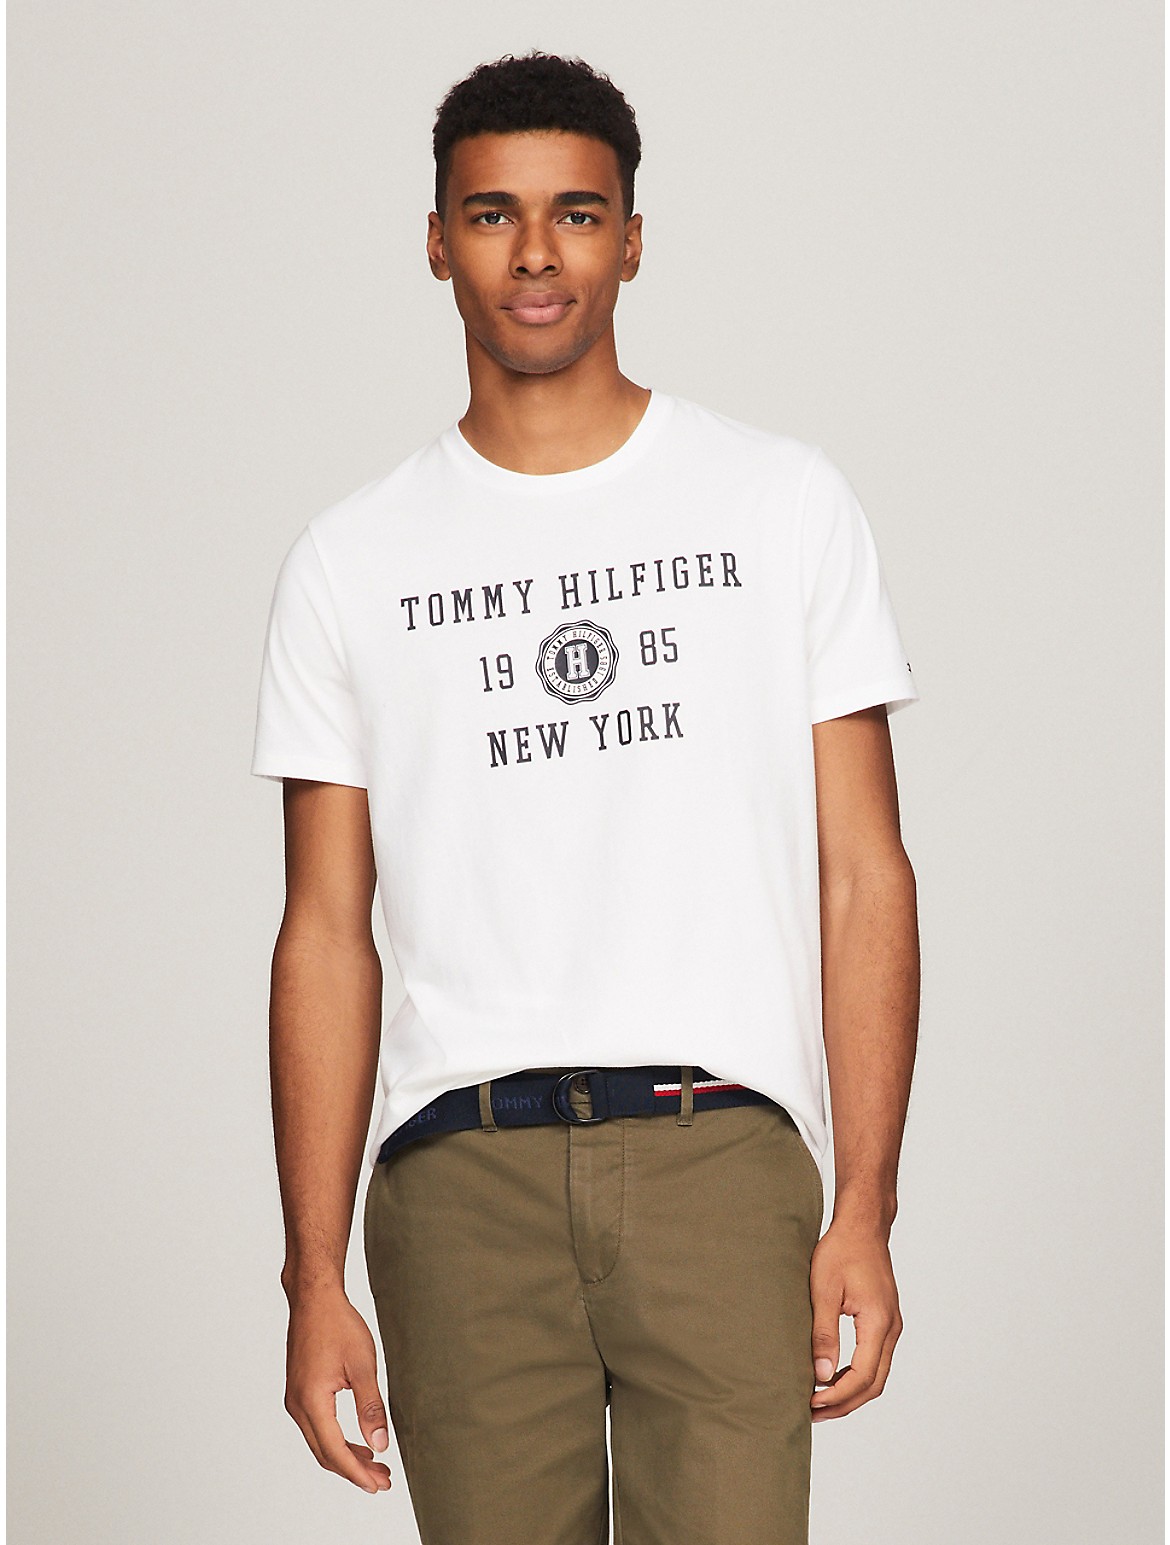 Tommy Hilfiger Men's Hilfiger New York Graphic T-Shirt